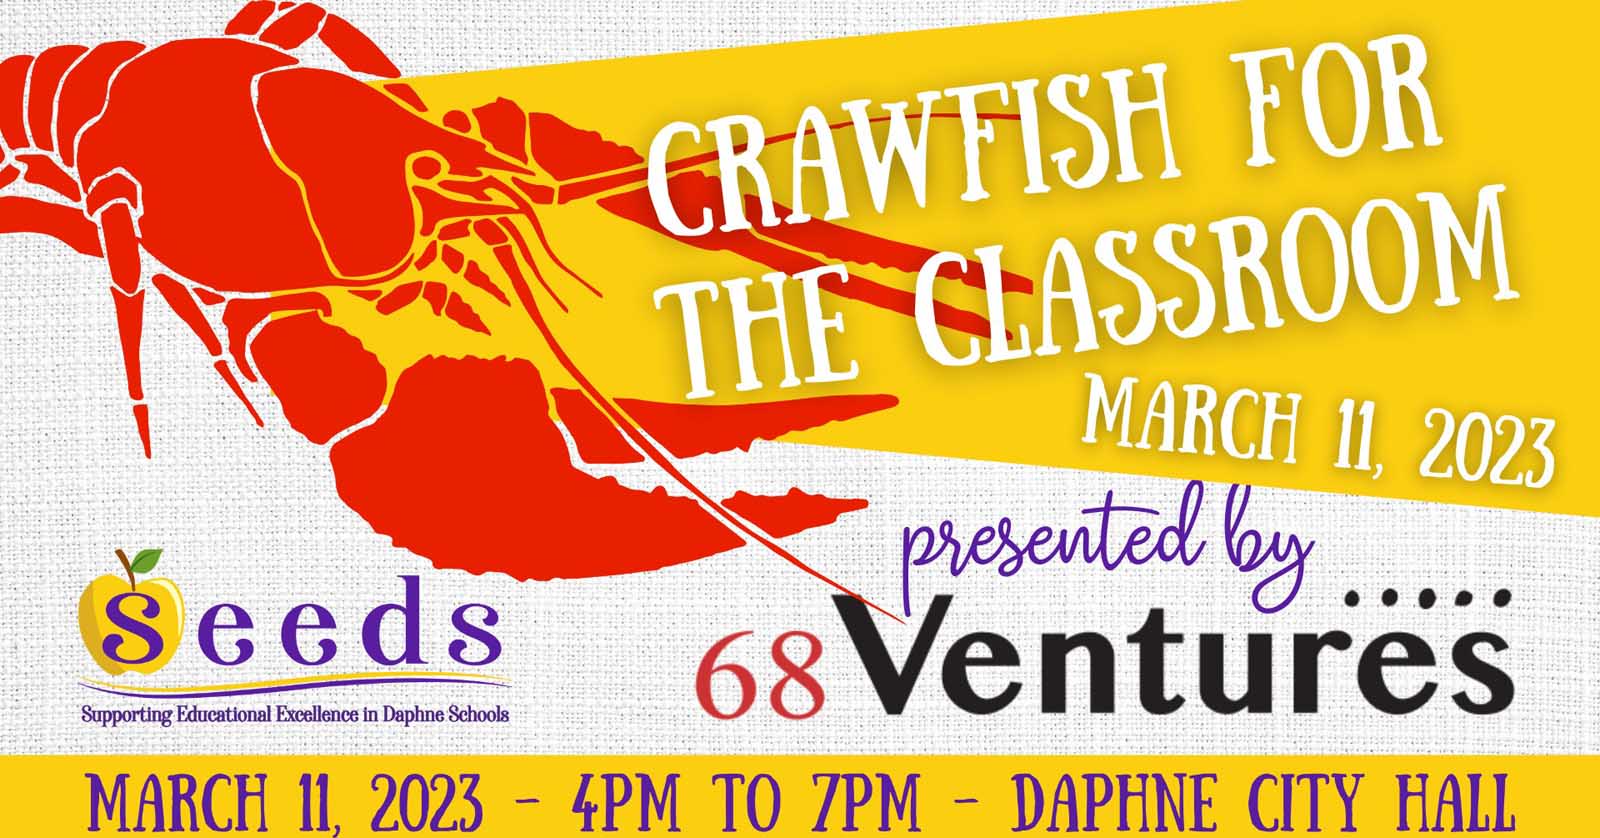 Crawfish Event To Raise Money For Daphne Schools